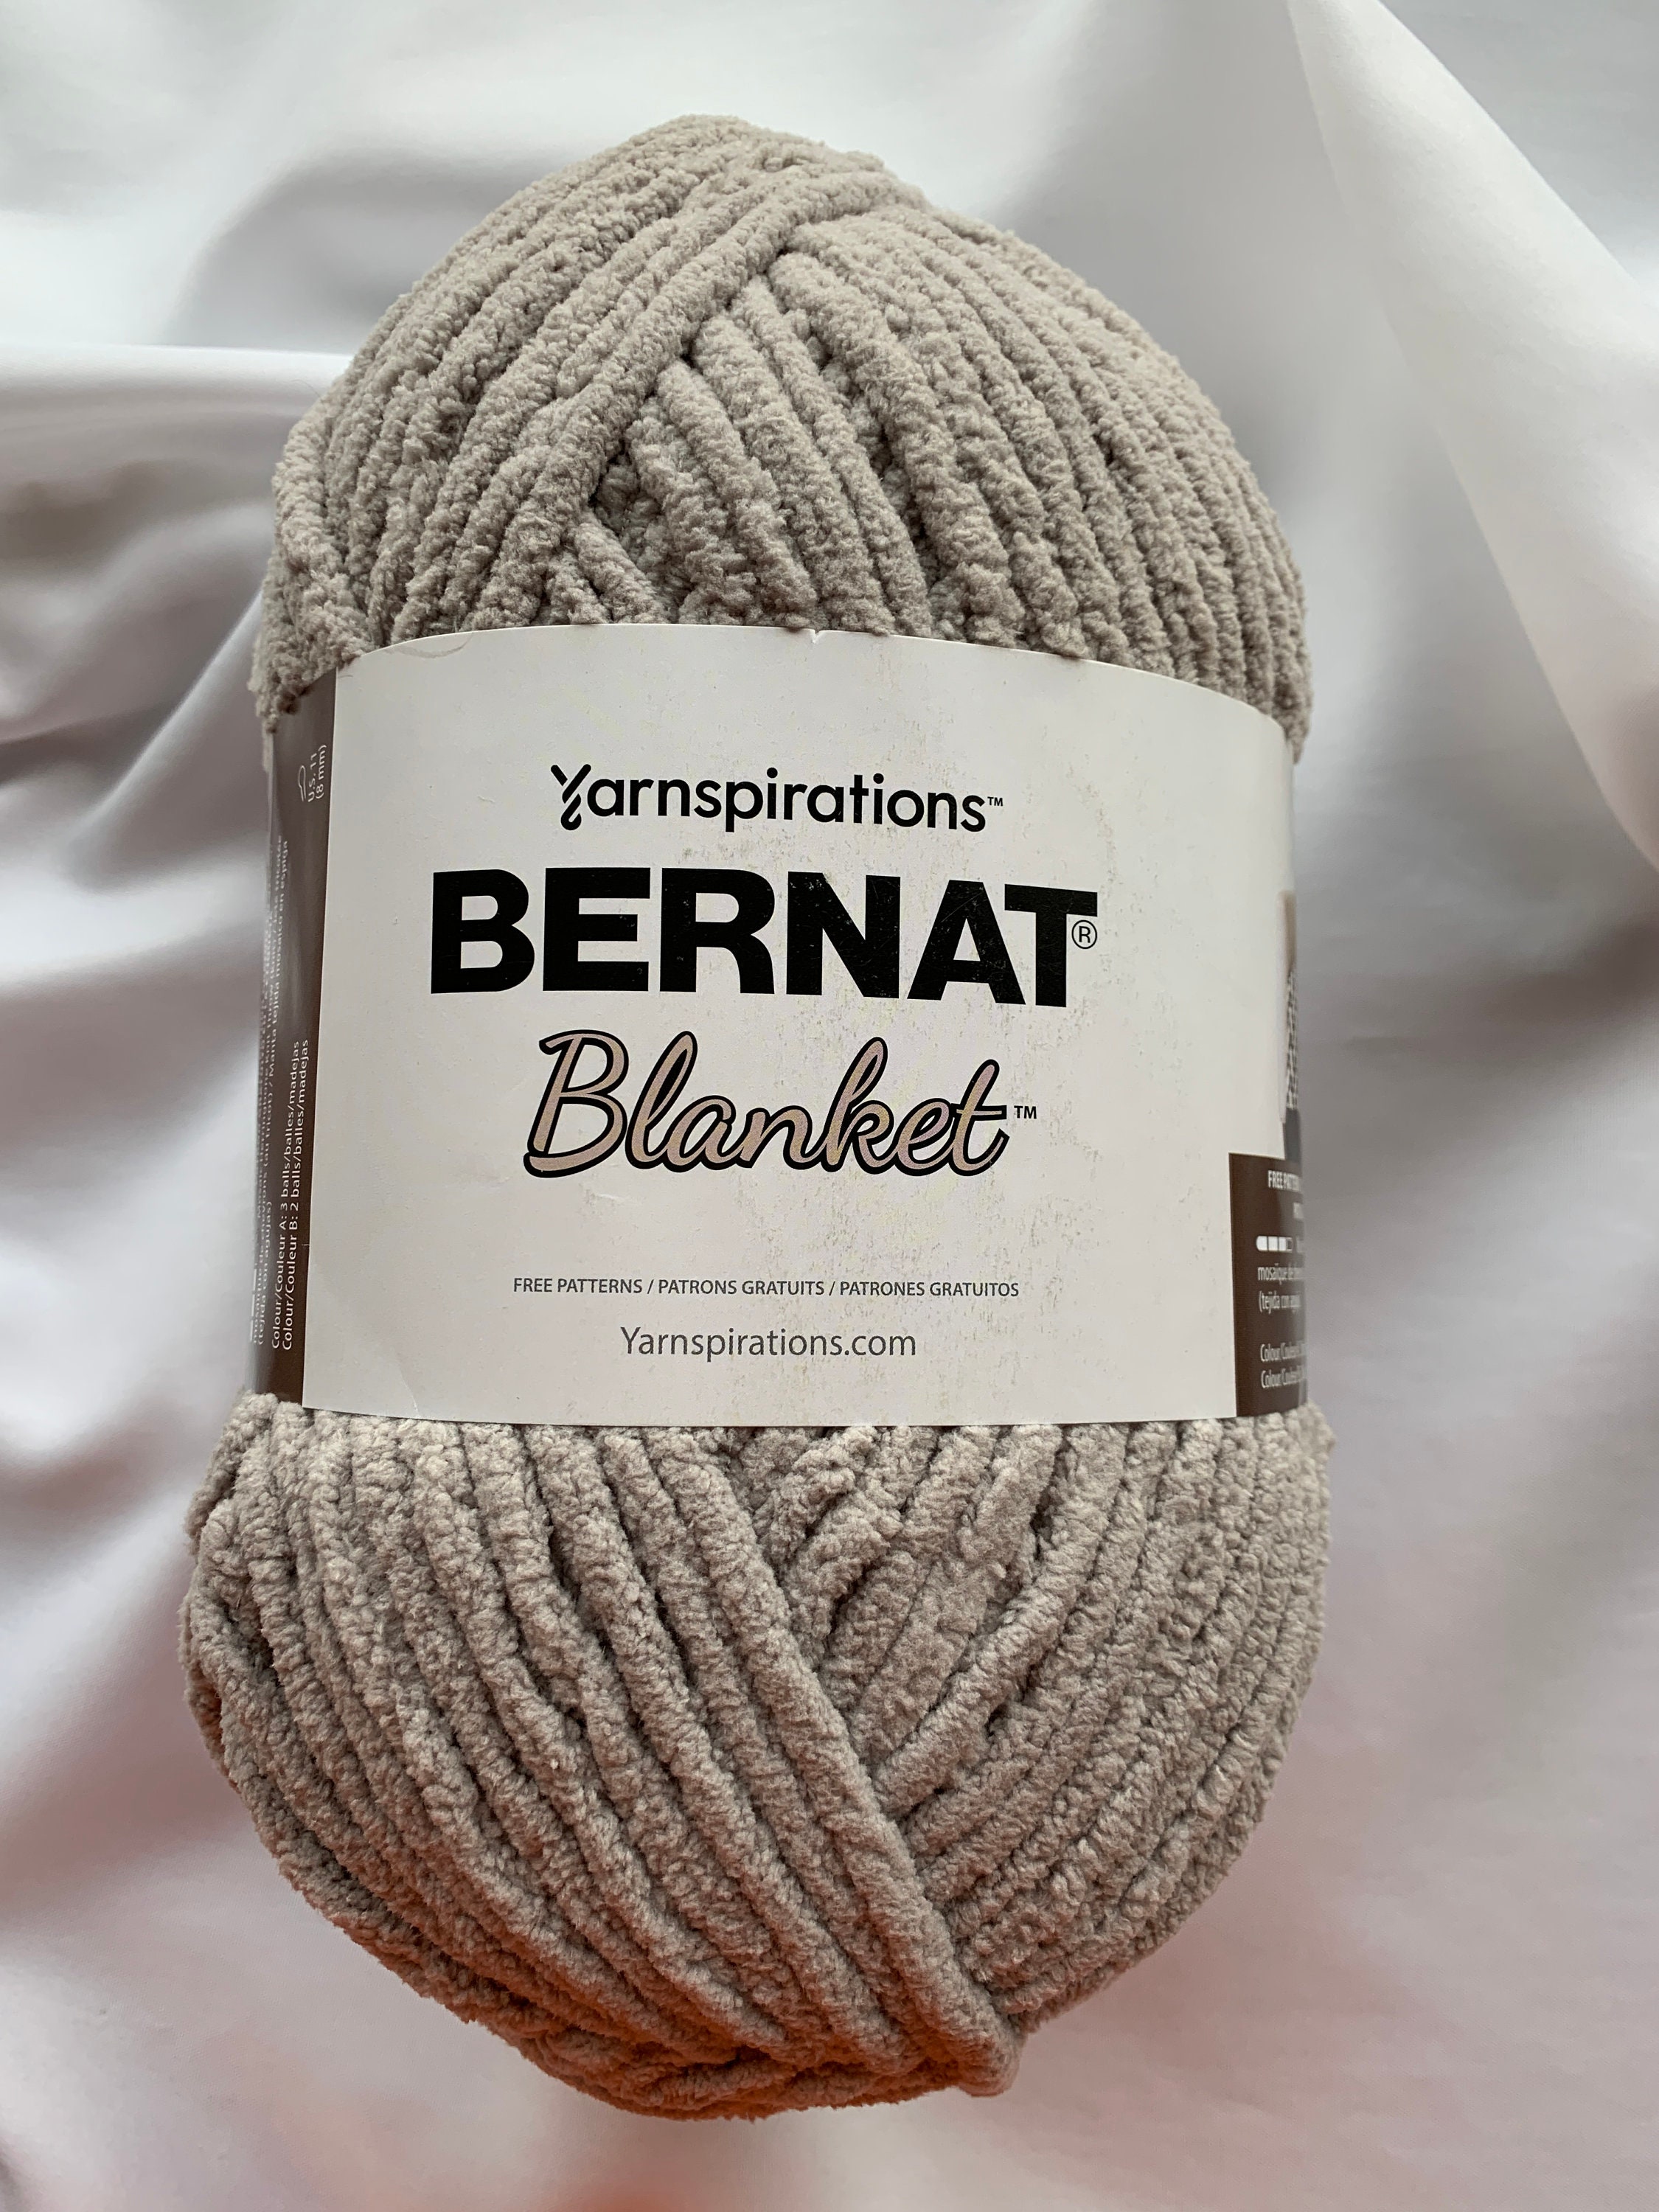 Bernat Maker Home Dec Nautical Varg Yarn - 2 Pack of 250g/8.8oz - Cotton -  5 Bulky - 317 Yards - Knitting/Crochet